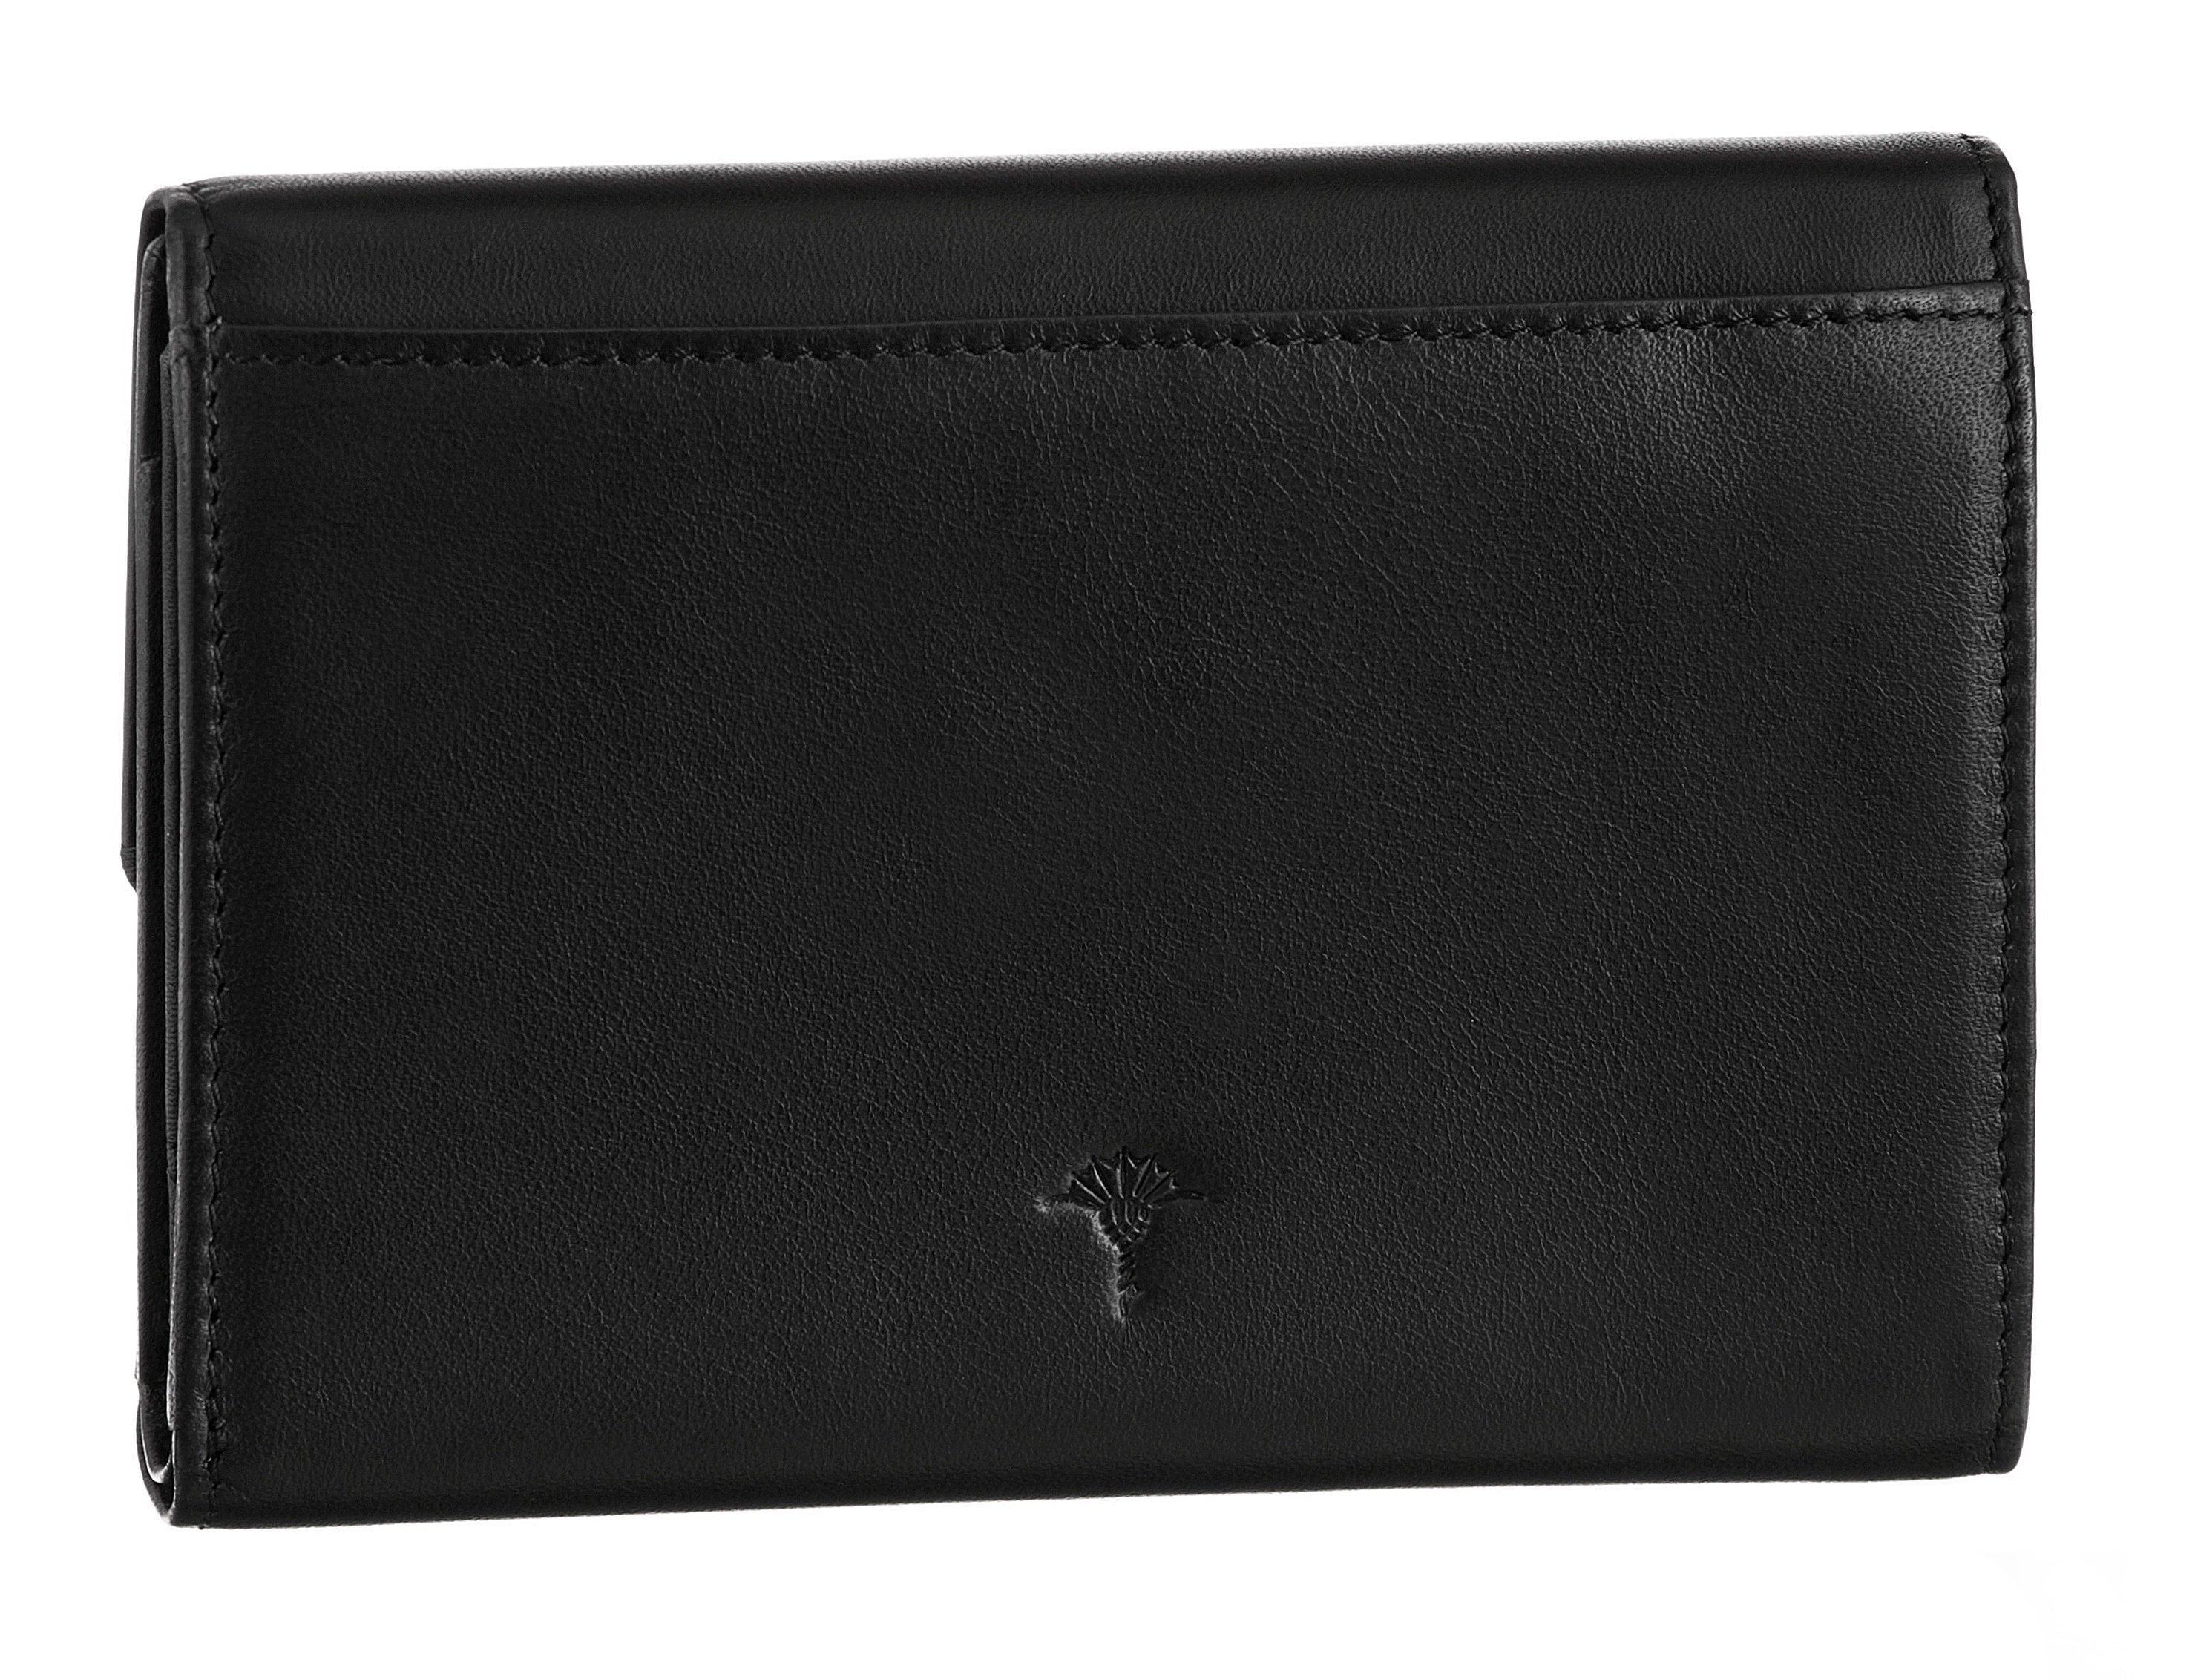 mh10f, in Joop! Geldbörse cosma sofisticato schlichtem Design black 1.0 purse